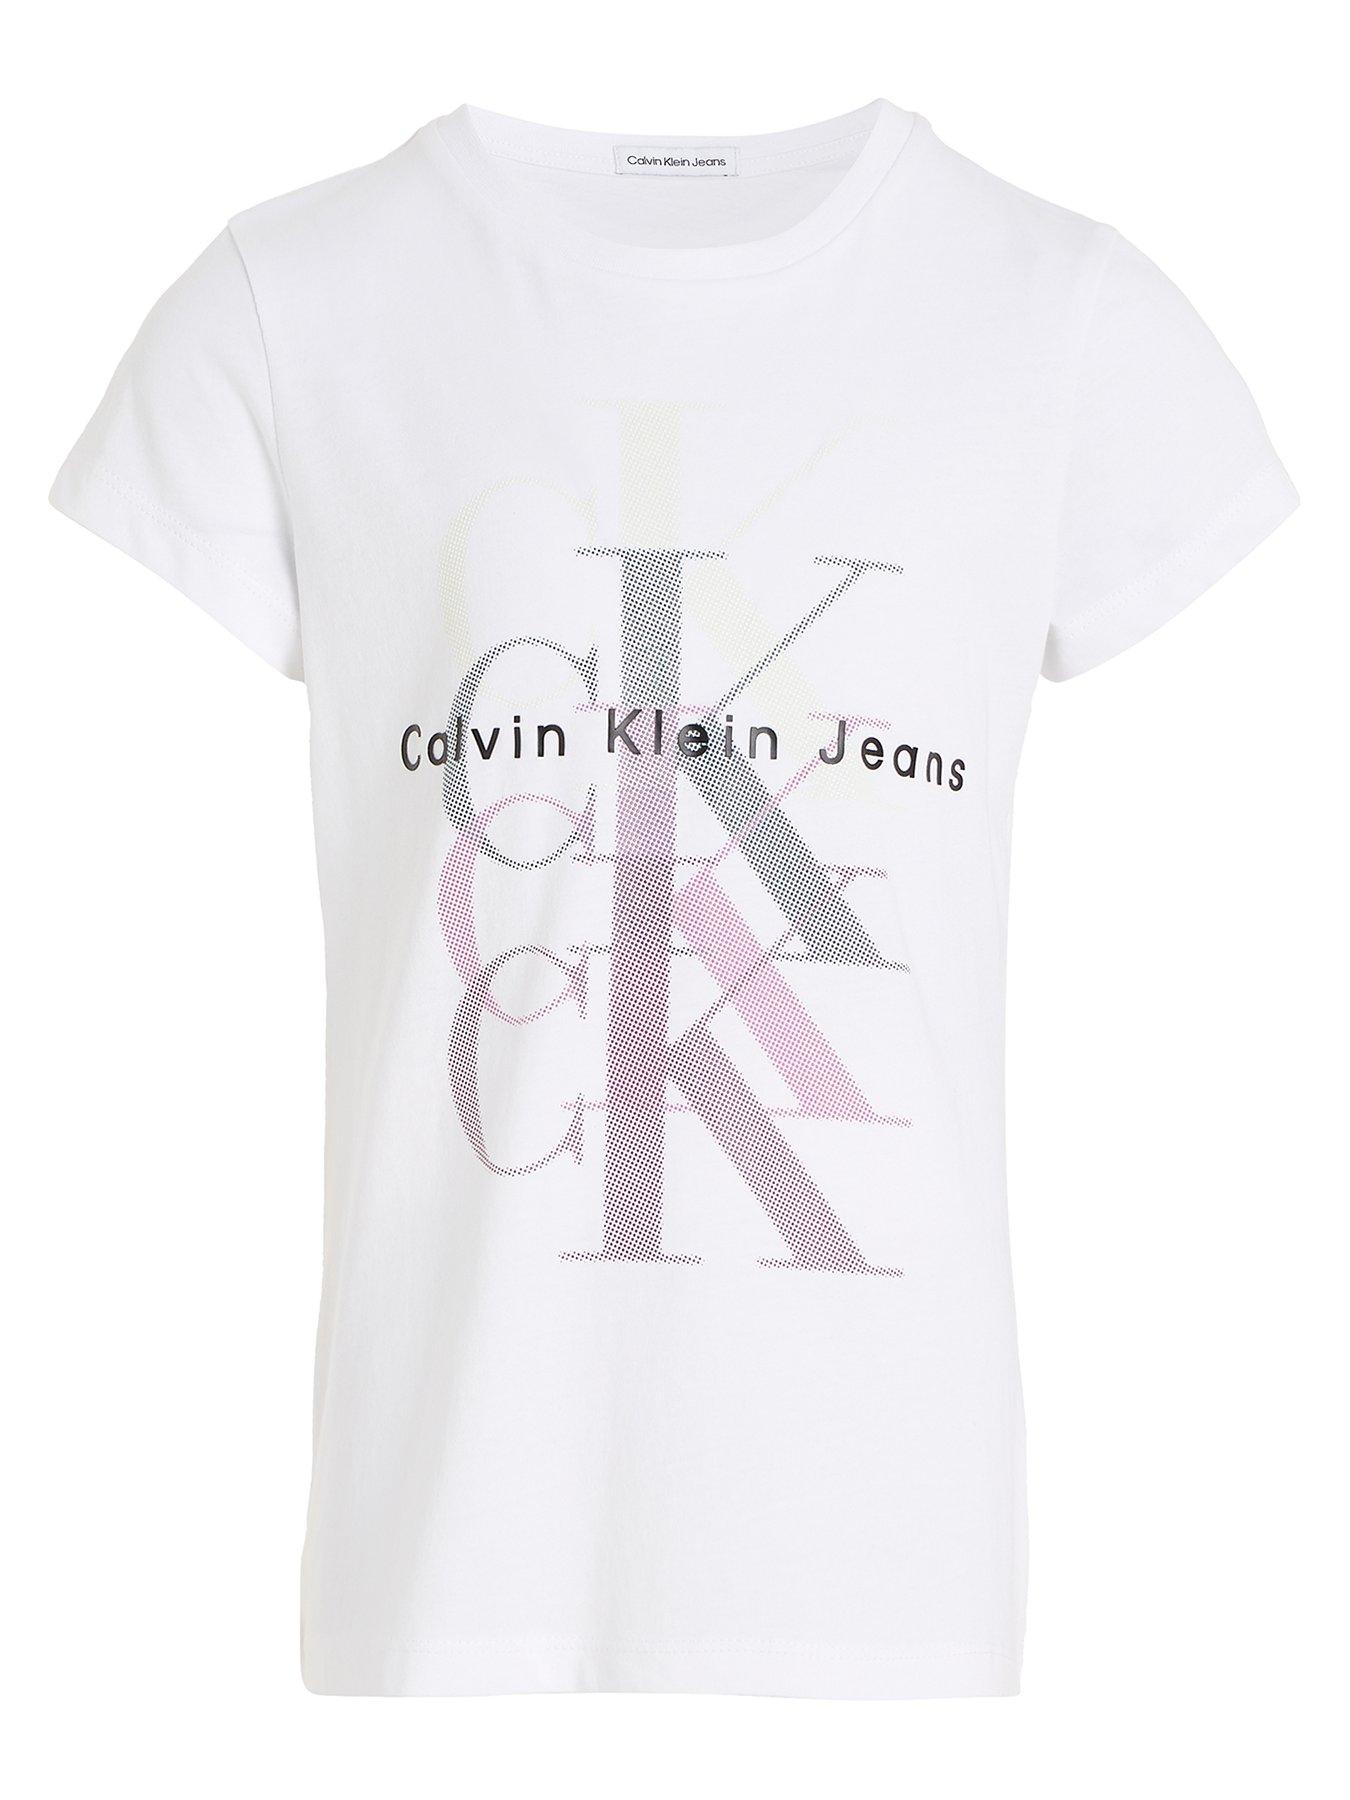 clothes | Calvin Very Girls Tops & klein | baby & Ireland | Child t-shirts |